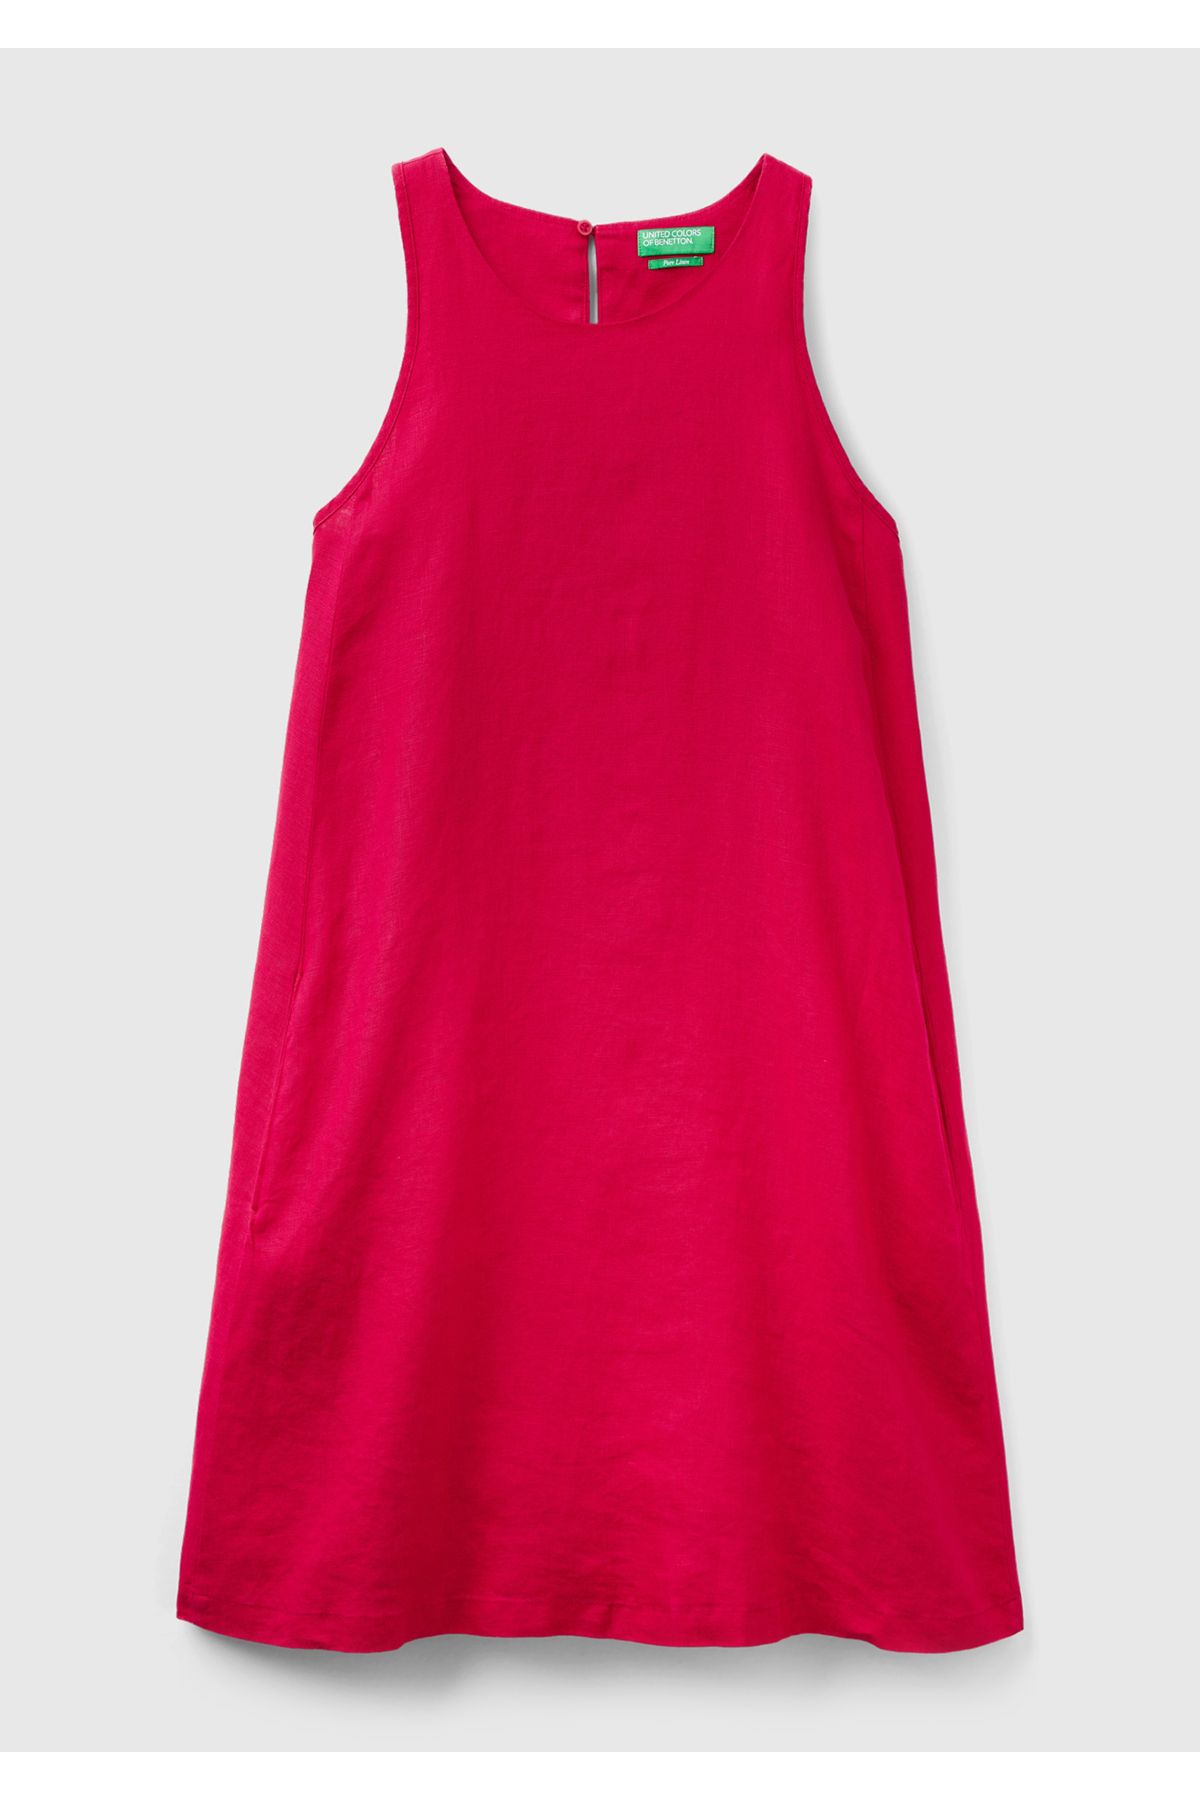 United Colors of Benetton Kadın Fuşya %100 Keten Kolsuz Elbise